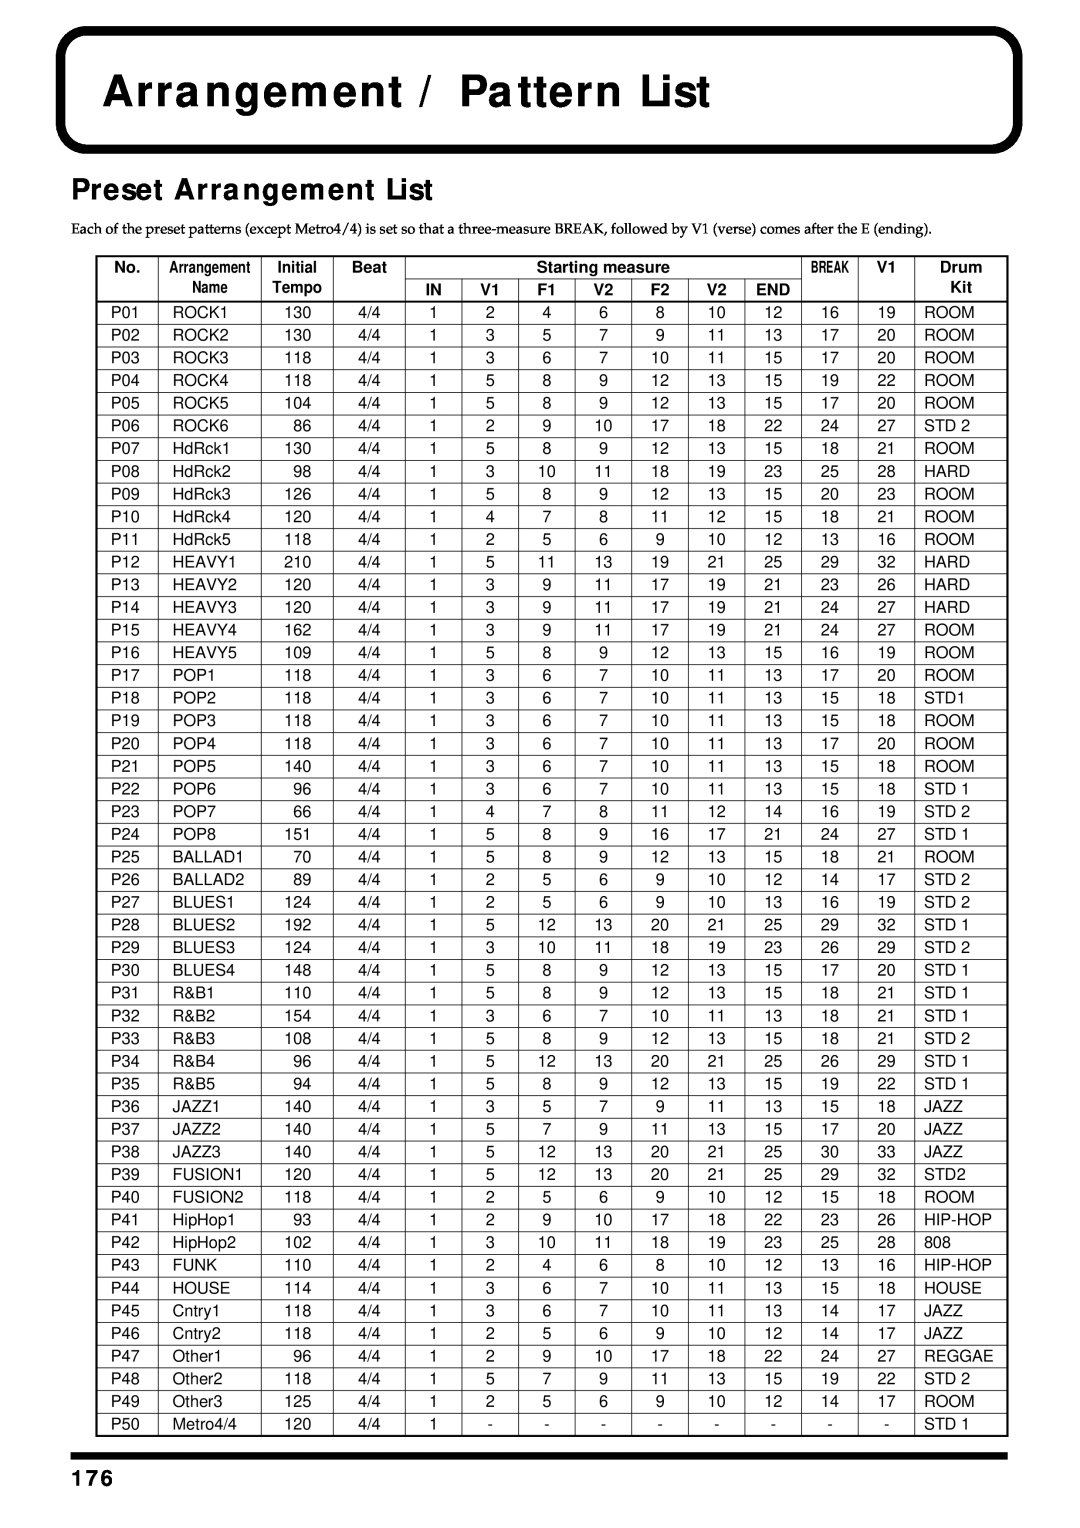 Roland BR-864 owner manual Arrangement / Pattern List, Preset Arrangement List 